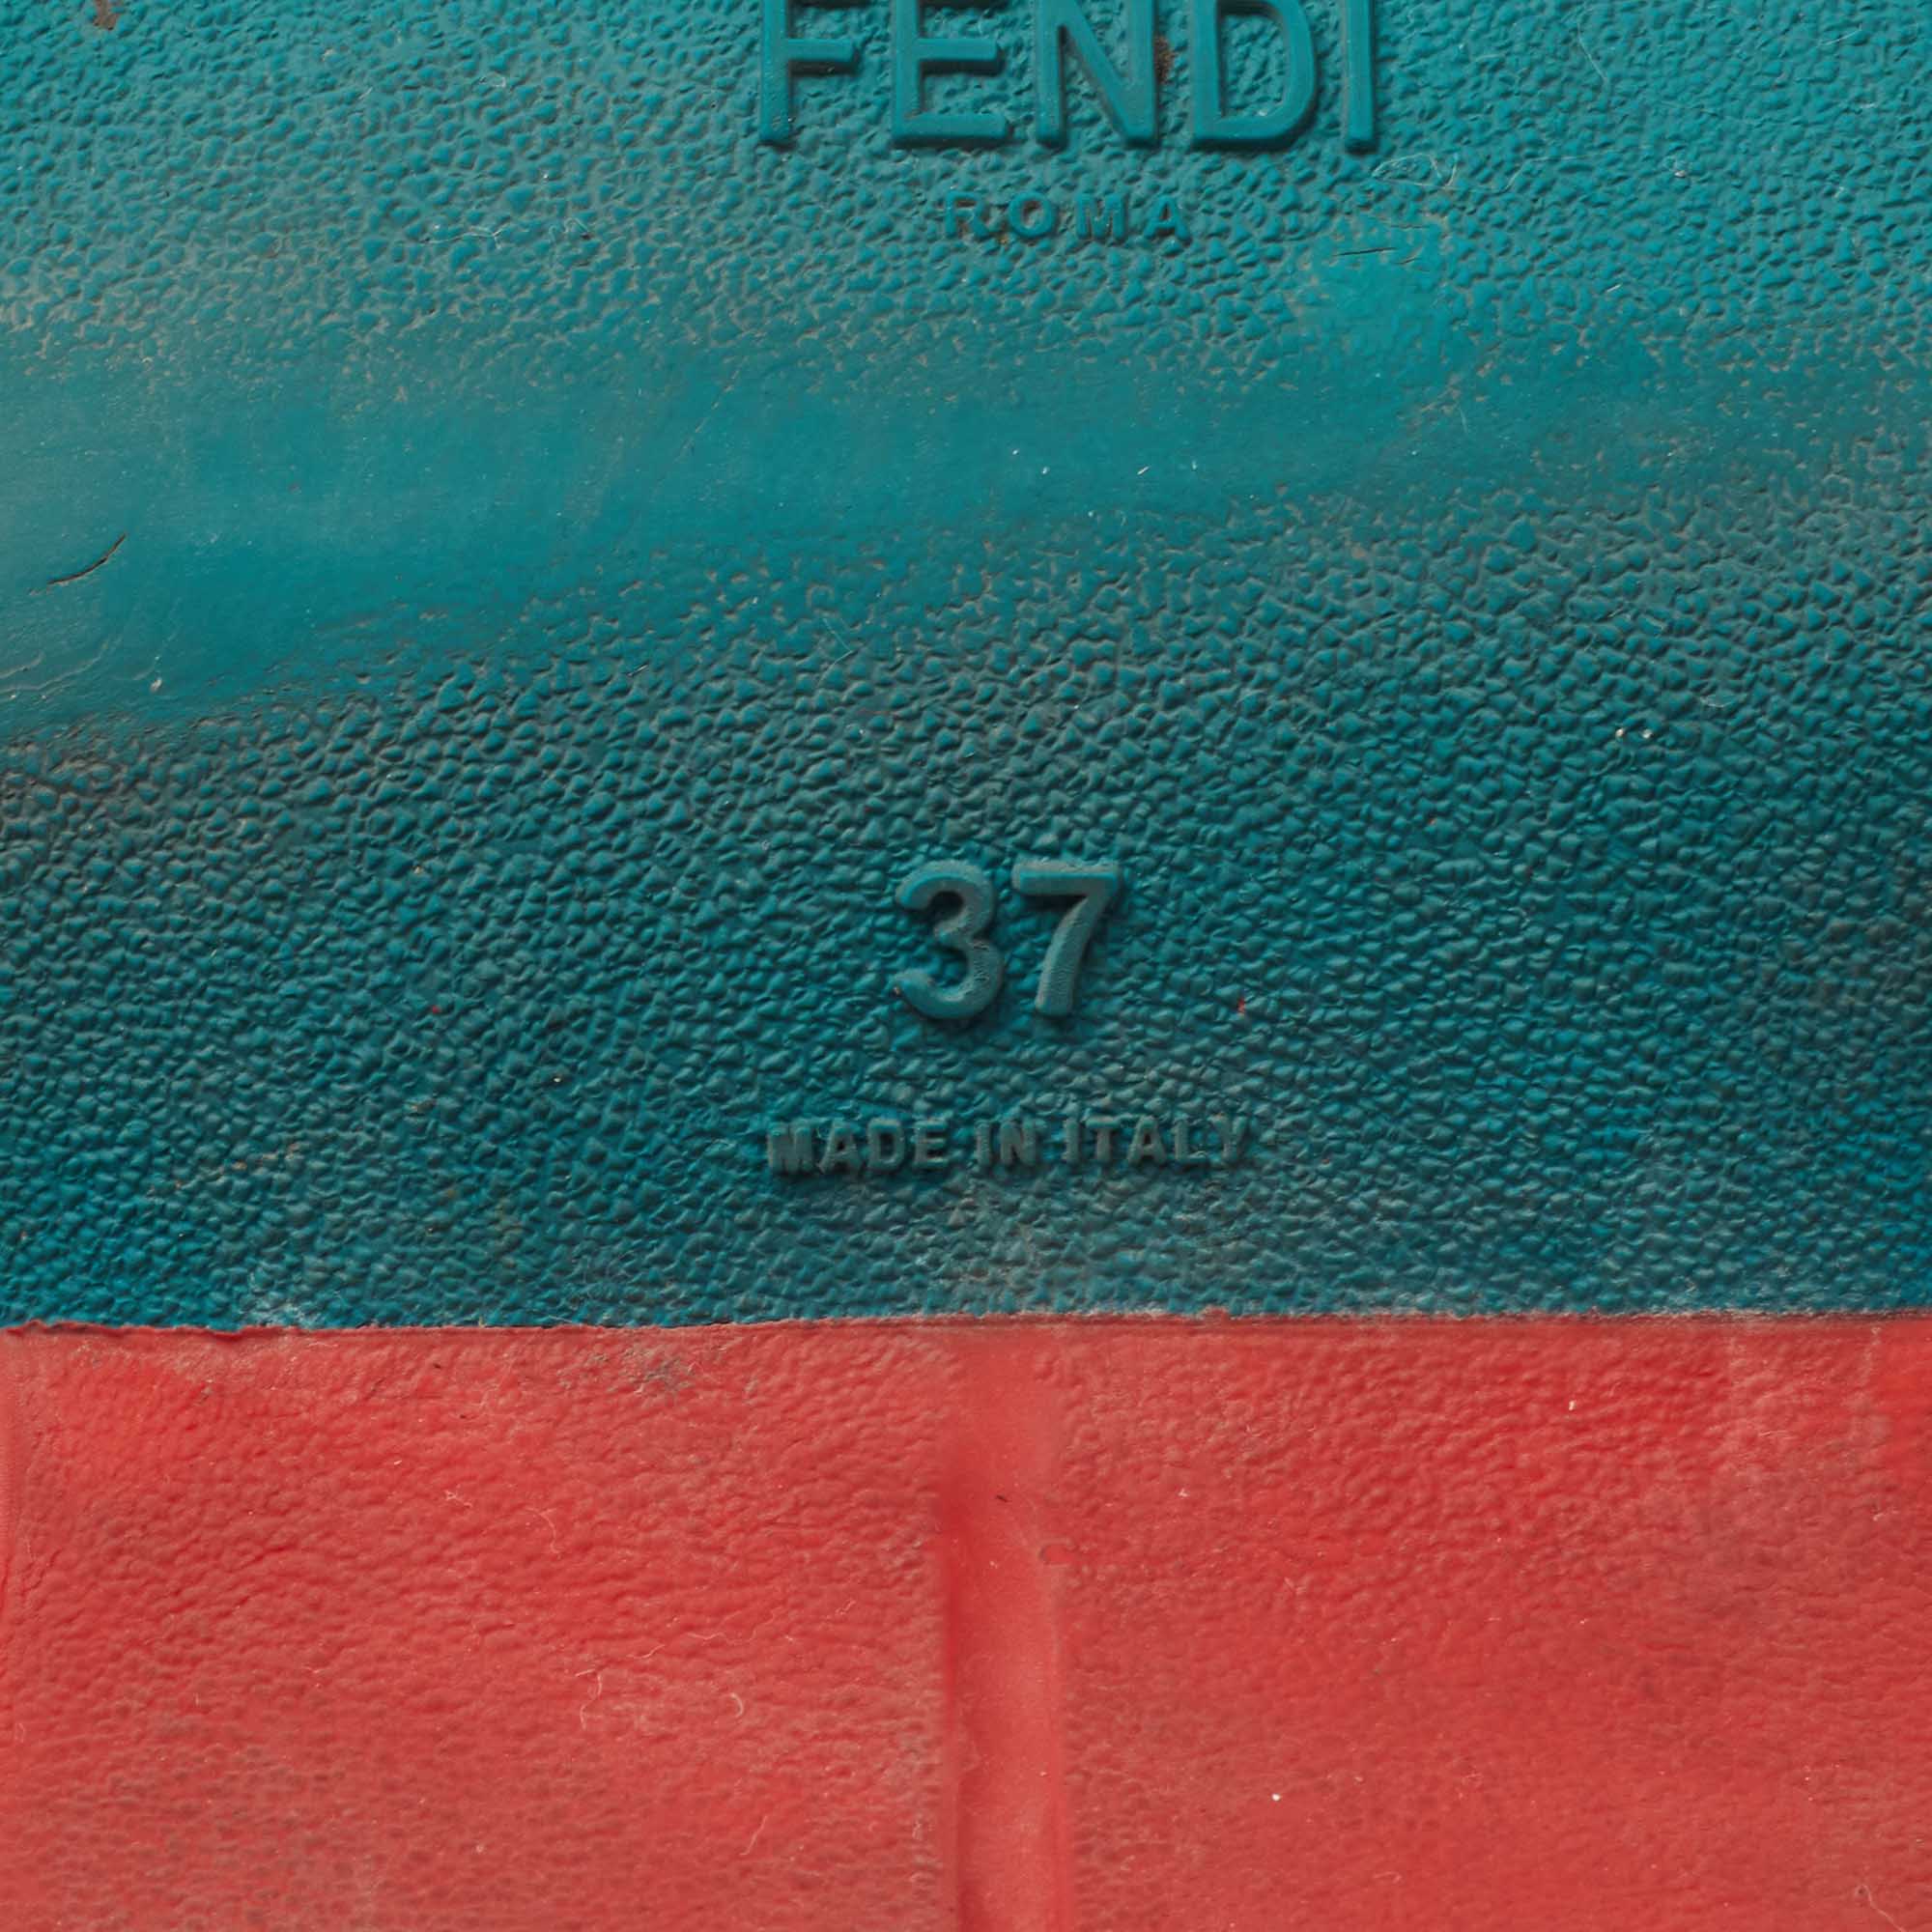 This Mini Fendi Is Fresh On The Salesfloor! $299.99 #trovela